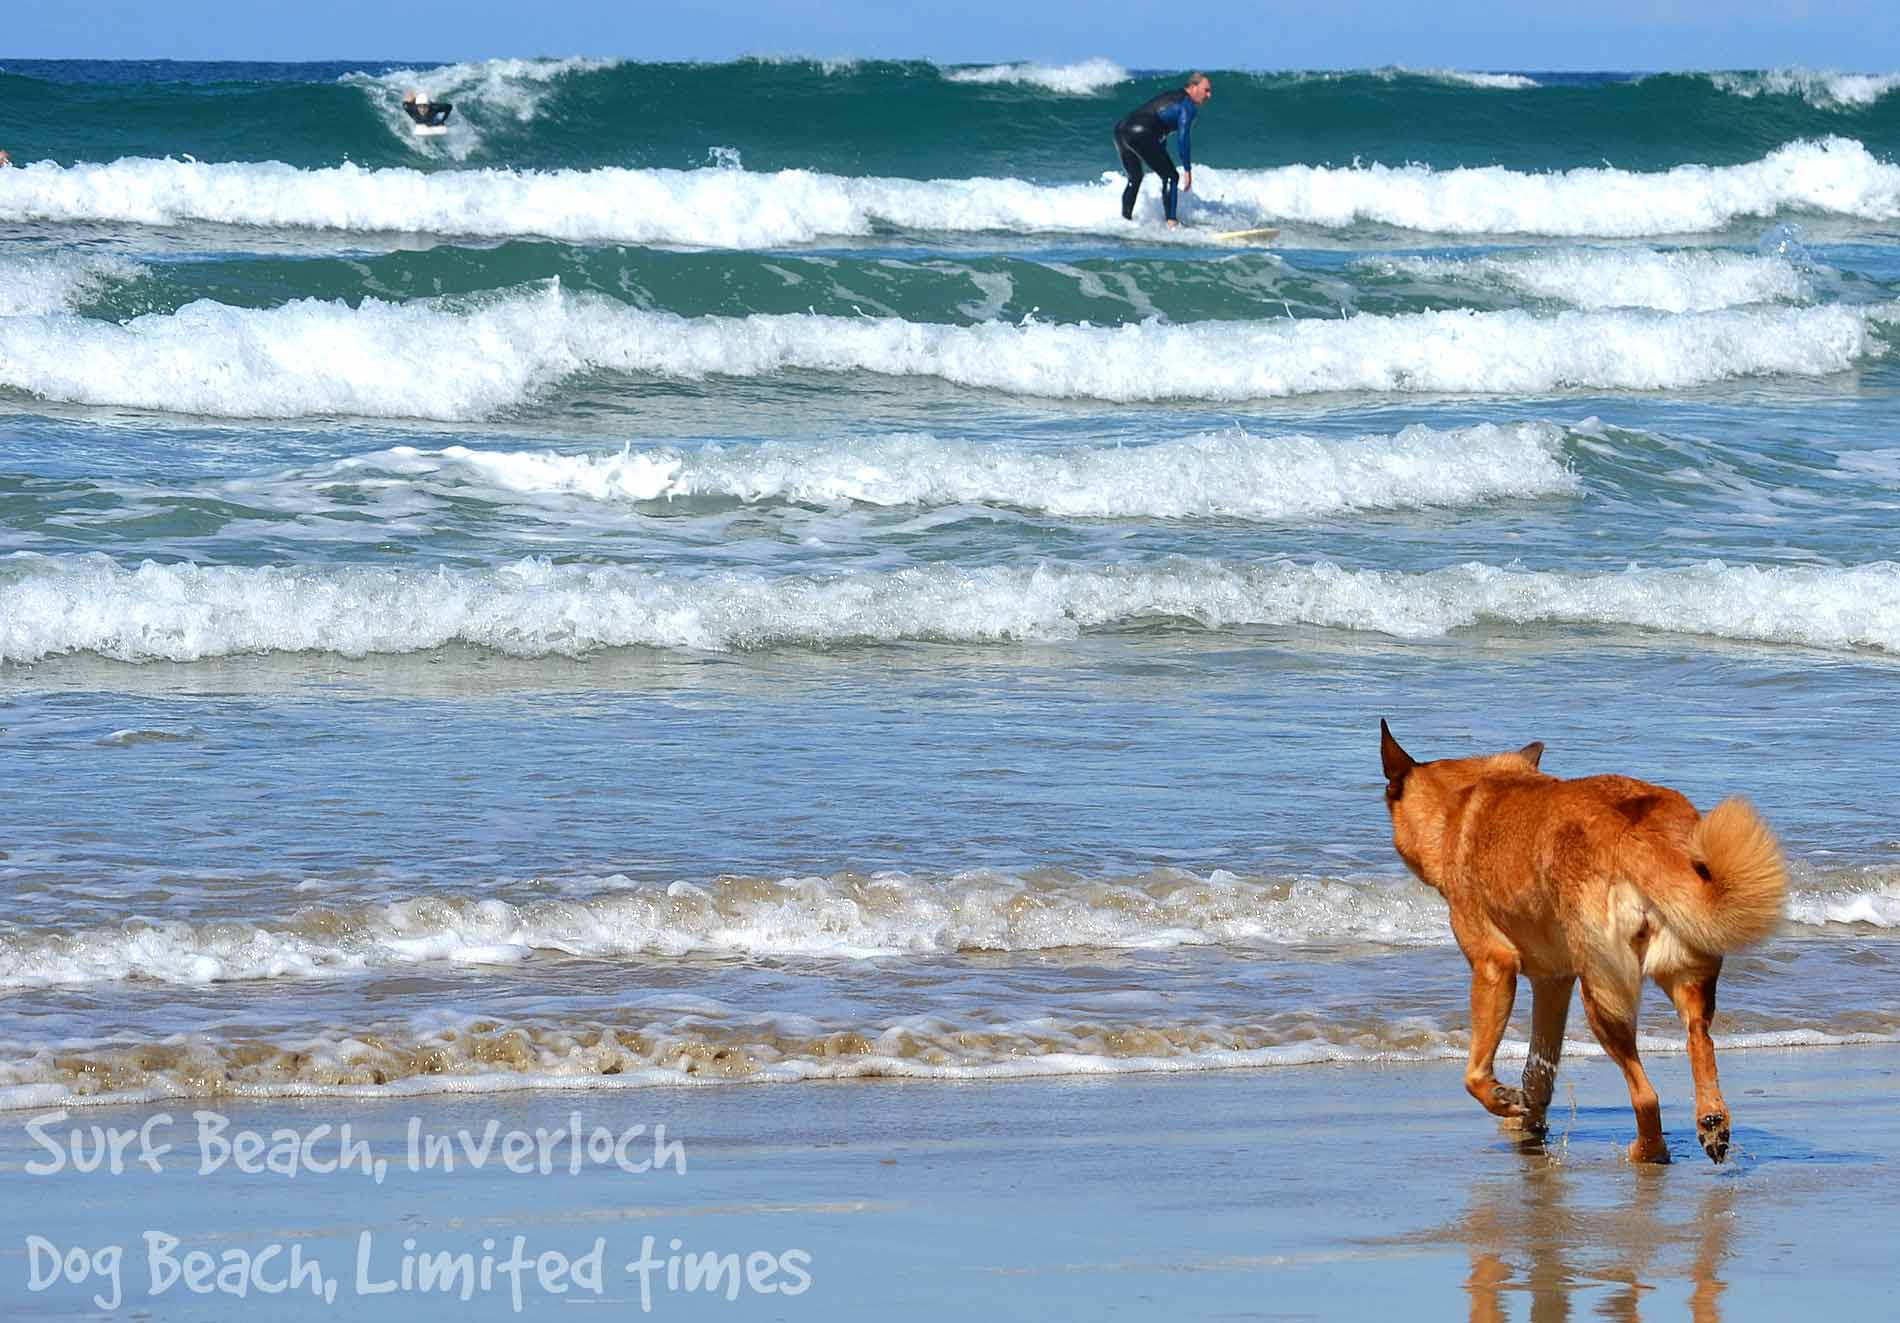 Surf Beach, Inverloch - Dog Beach Limited times